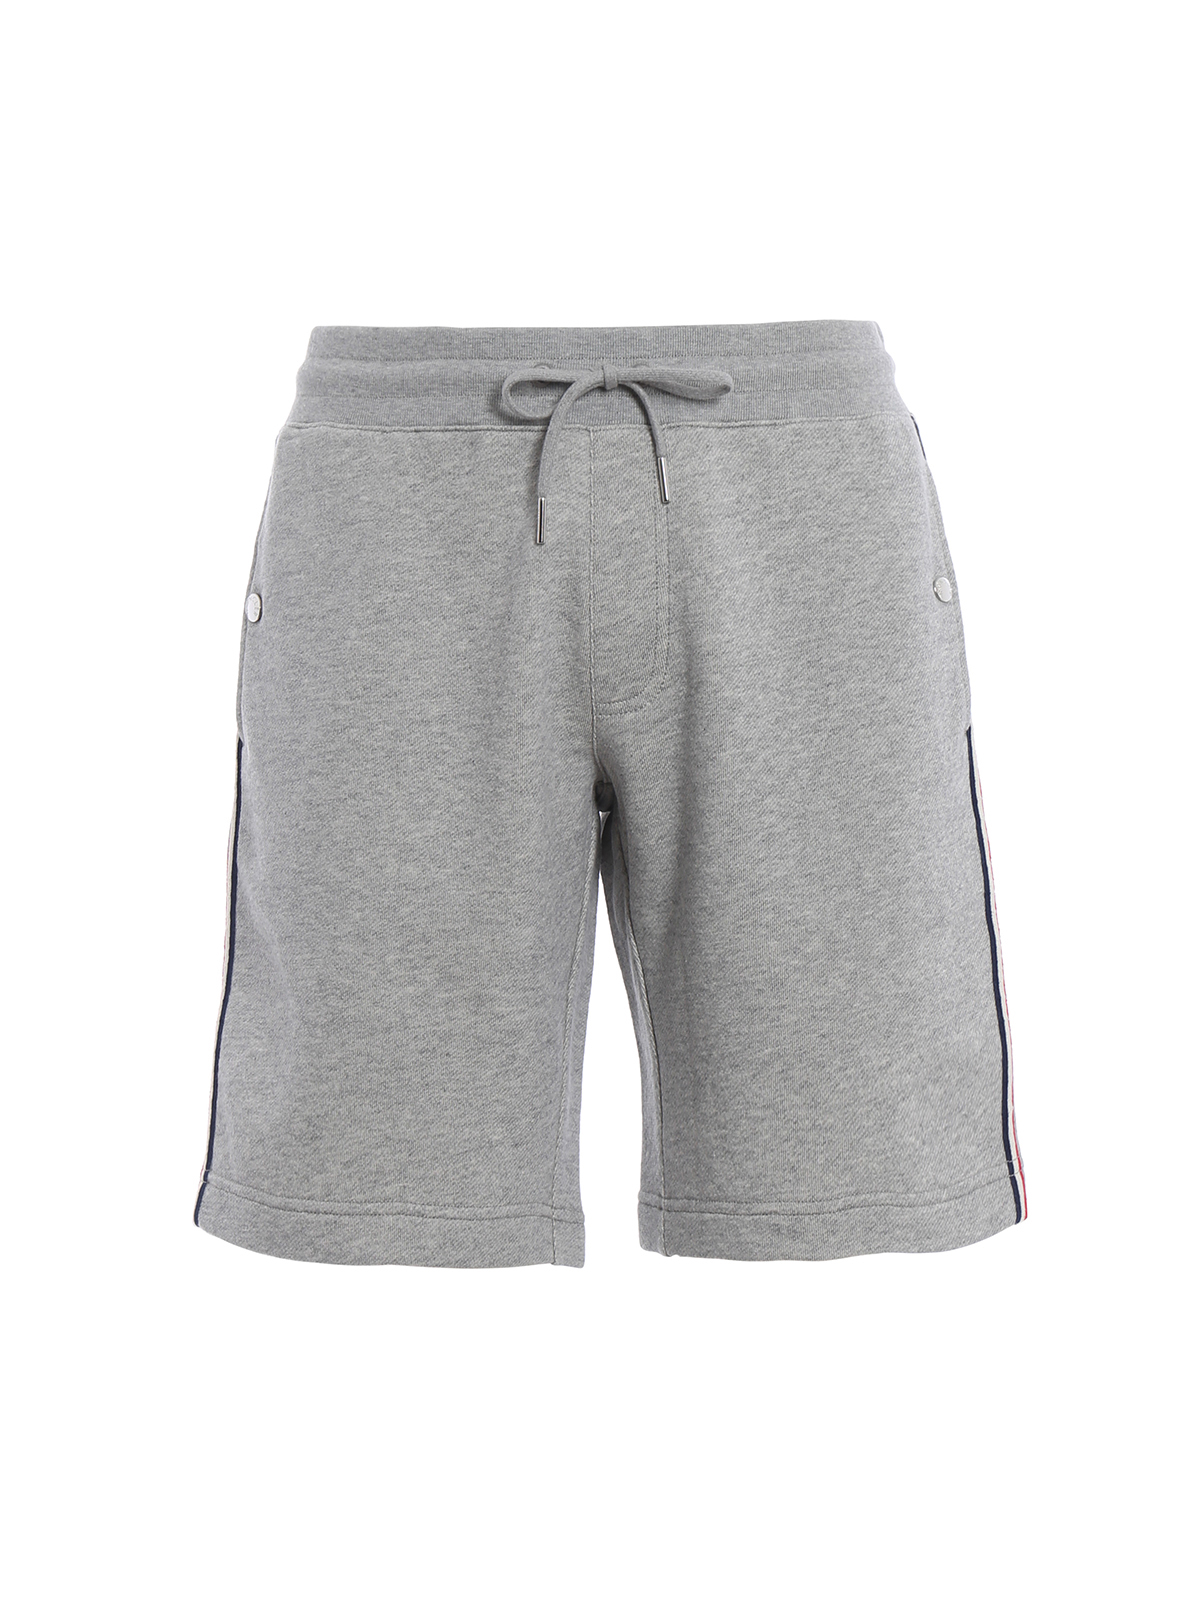 moncler grey shorts